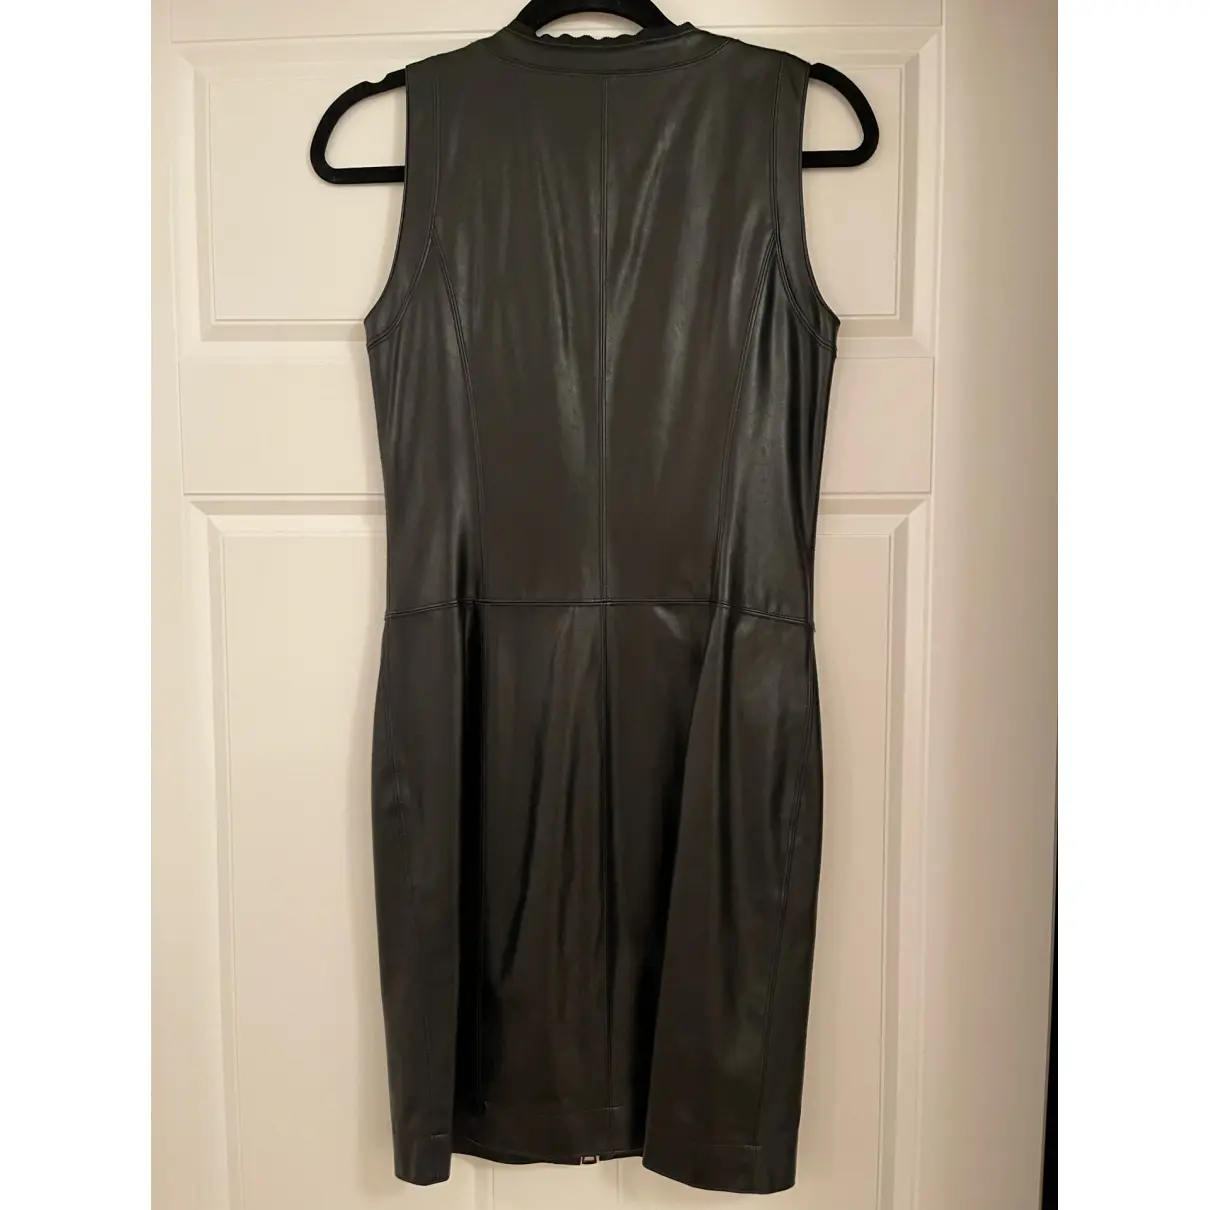 Buy Marc Cain Vegan leather dress online